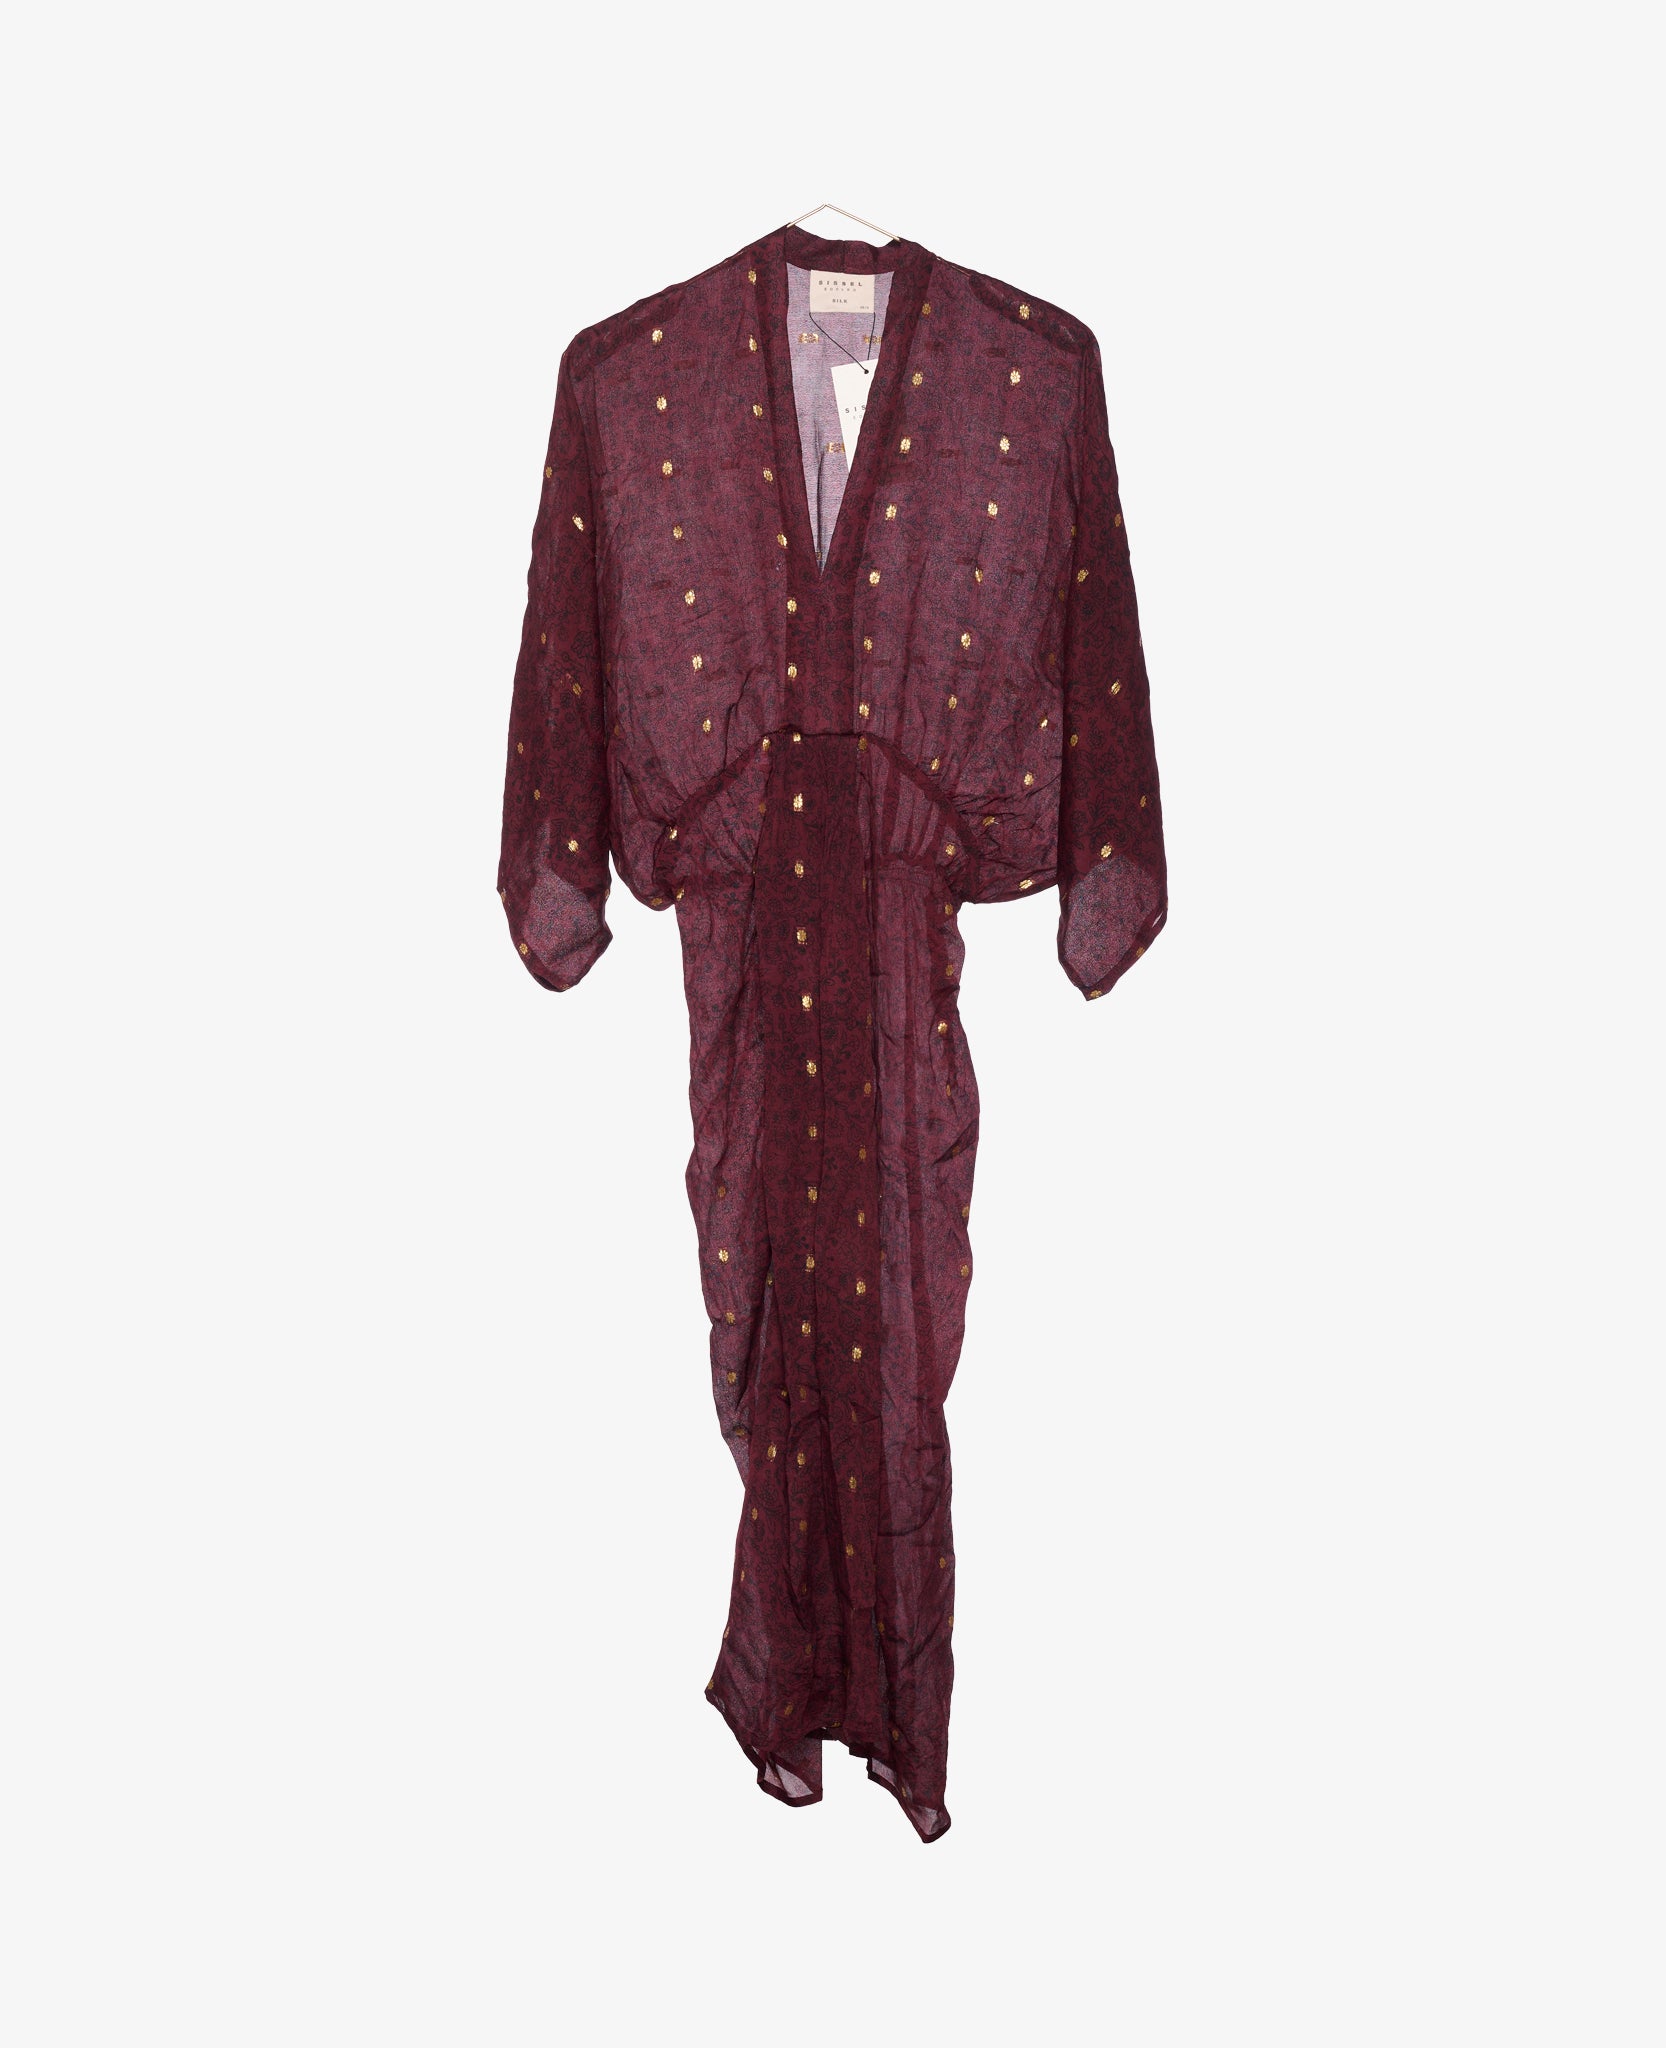 Juno Silk Dress - No. 297 Size: XS/S